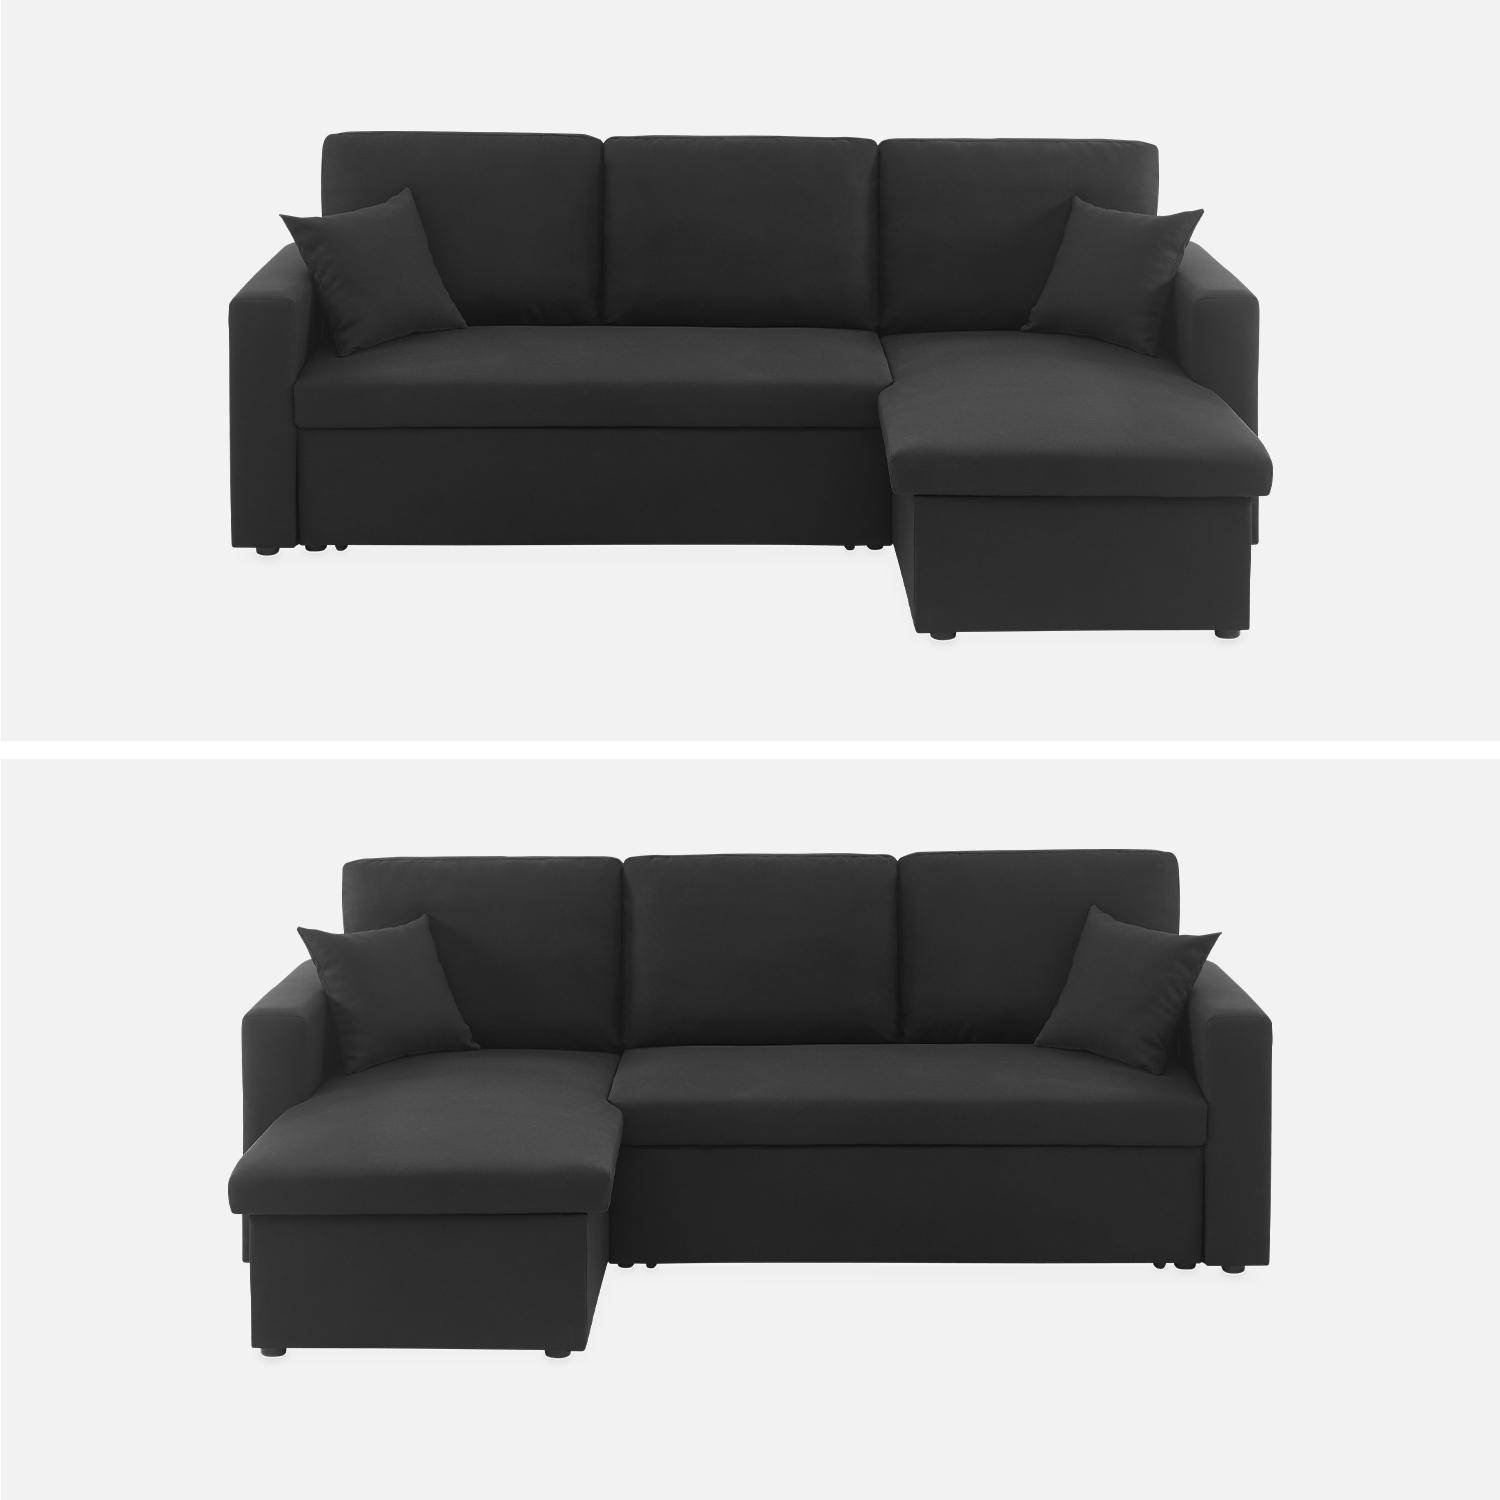 3-seater reversible black corner sofa bed with storage box, black L219xD81xH68cm, IDA,sweeek,Photo6